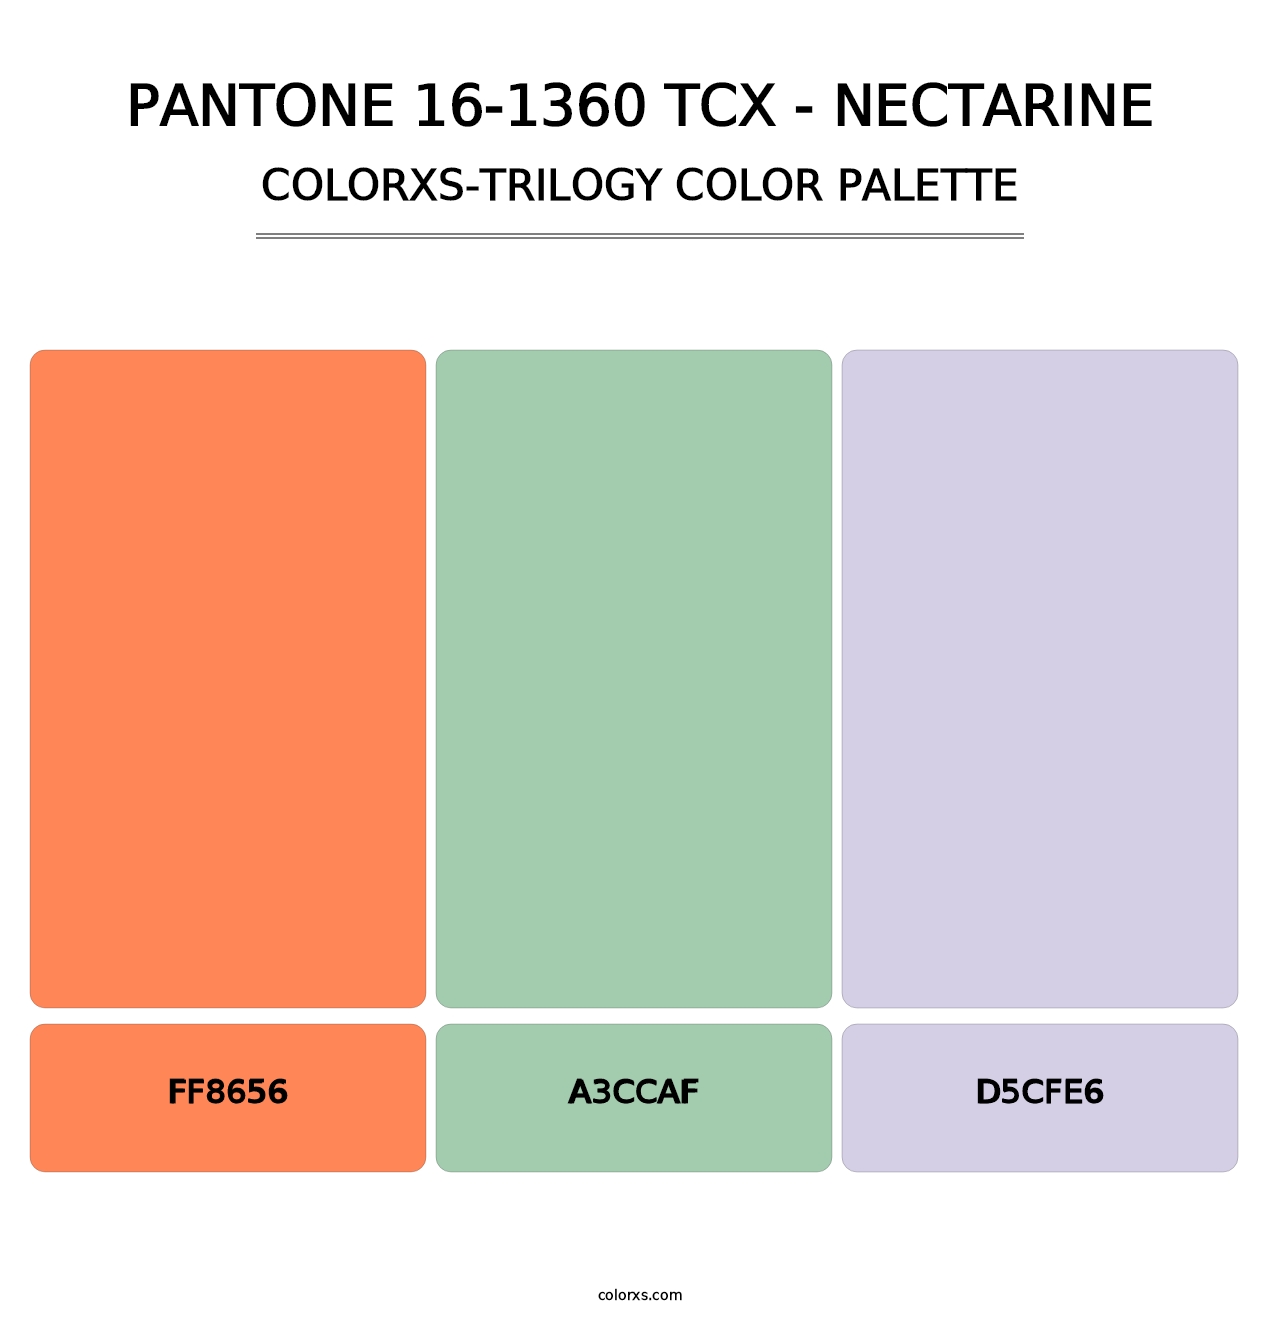 PANTONE 16-1360 TCX - Nectarine - Colorxs Trilogy Palette